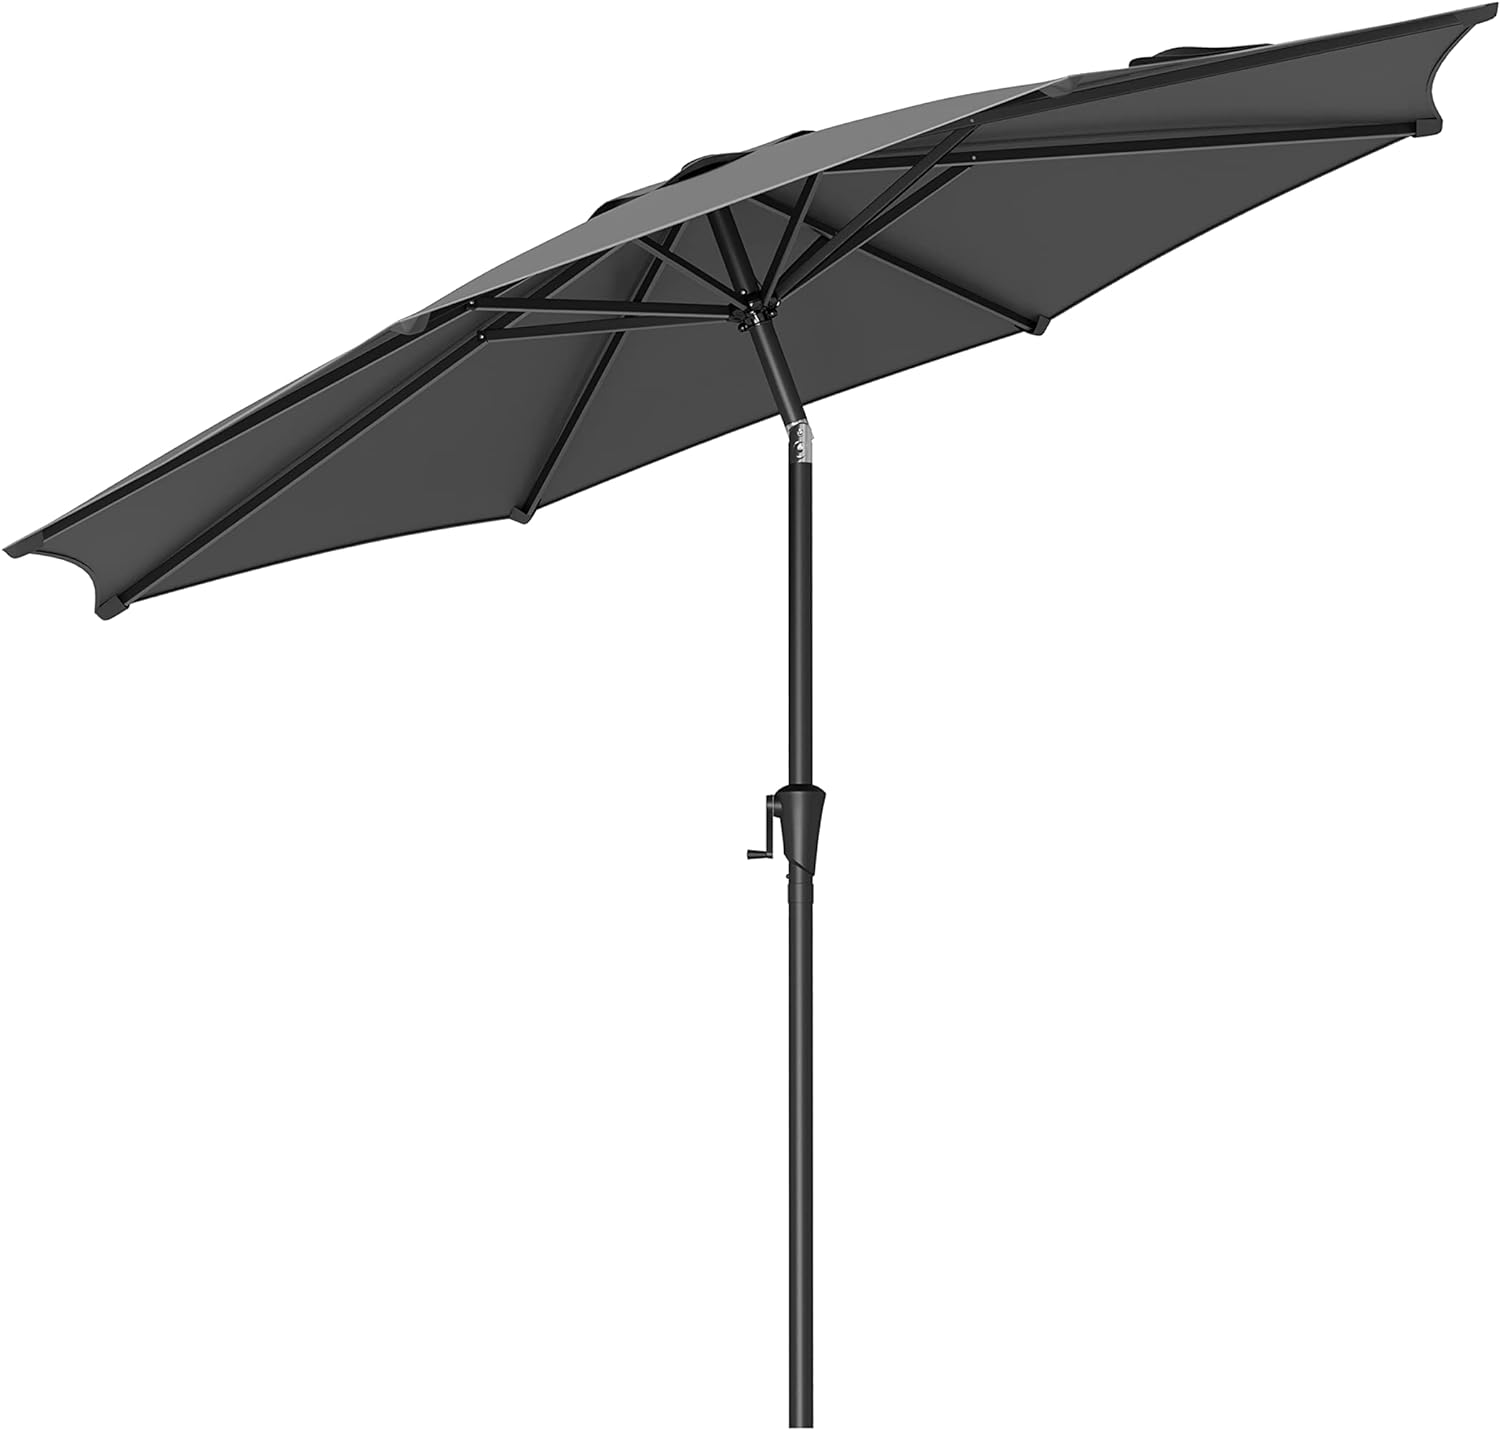 Stor luksus parasol i sort - 3 meter